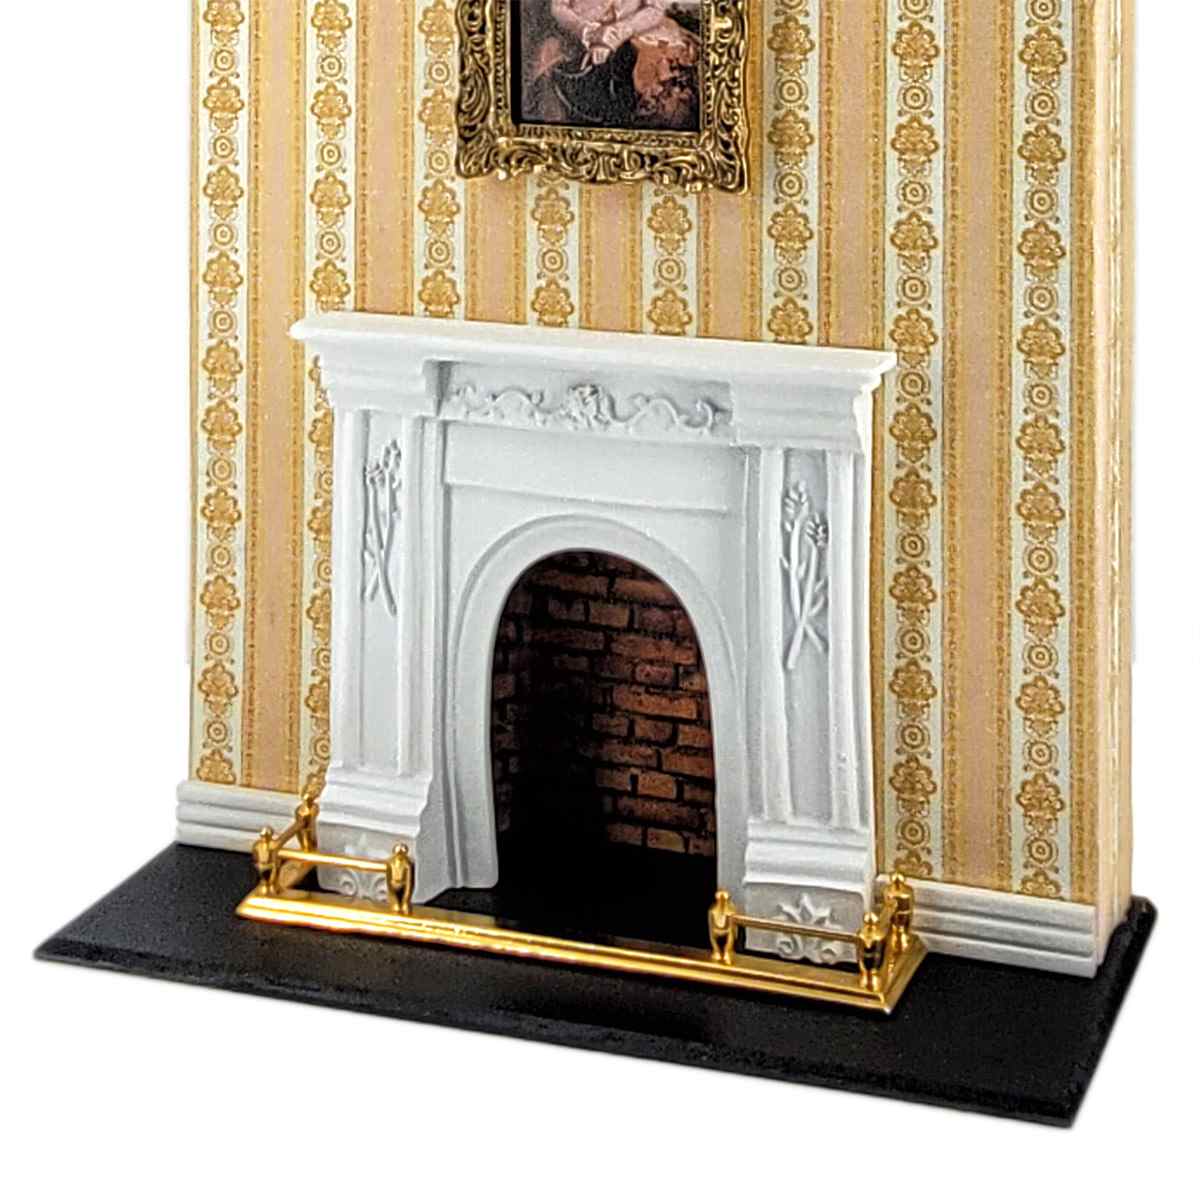 Victorian fireplace mantle　ビクトリア朝暖炉